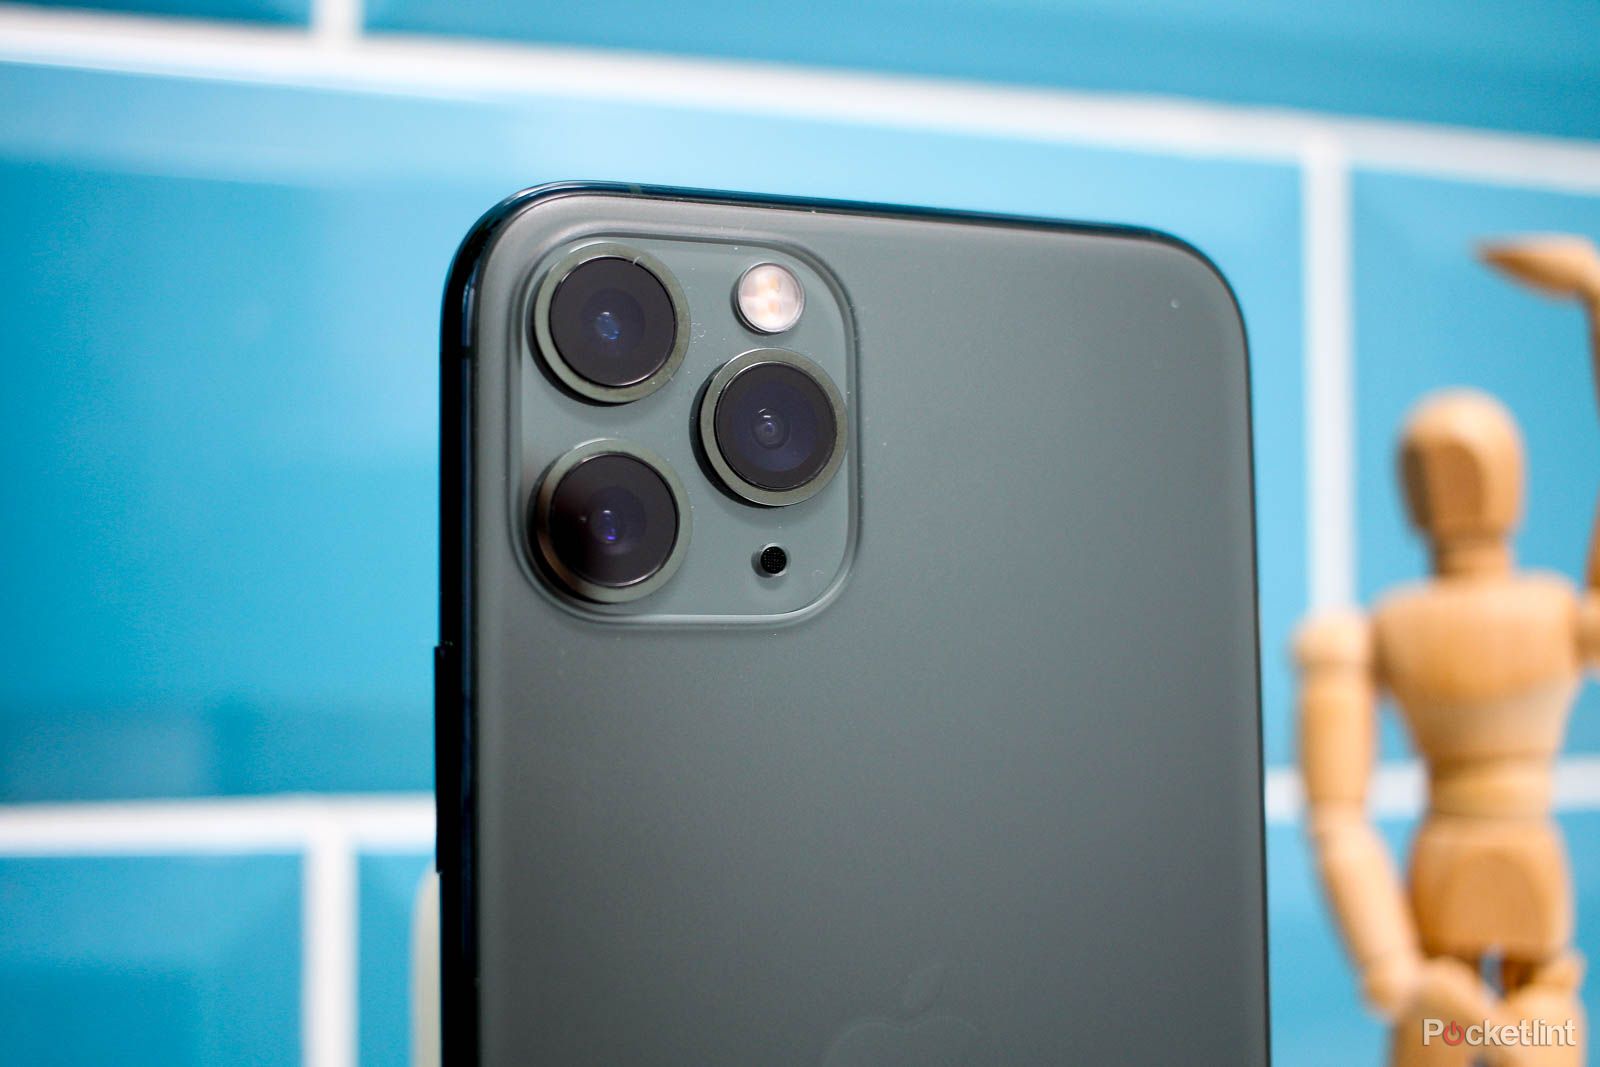 The iPhone 12 camera might employ a 64 megapixel sensor image 1